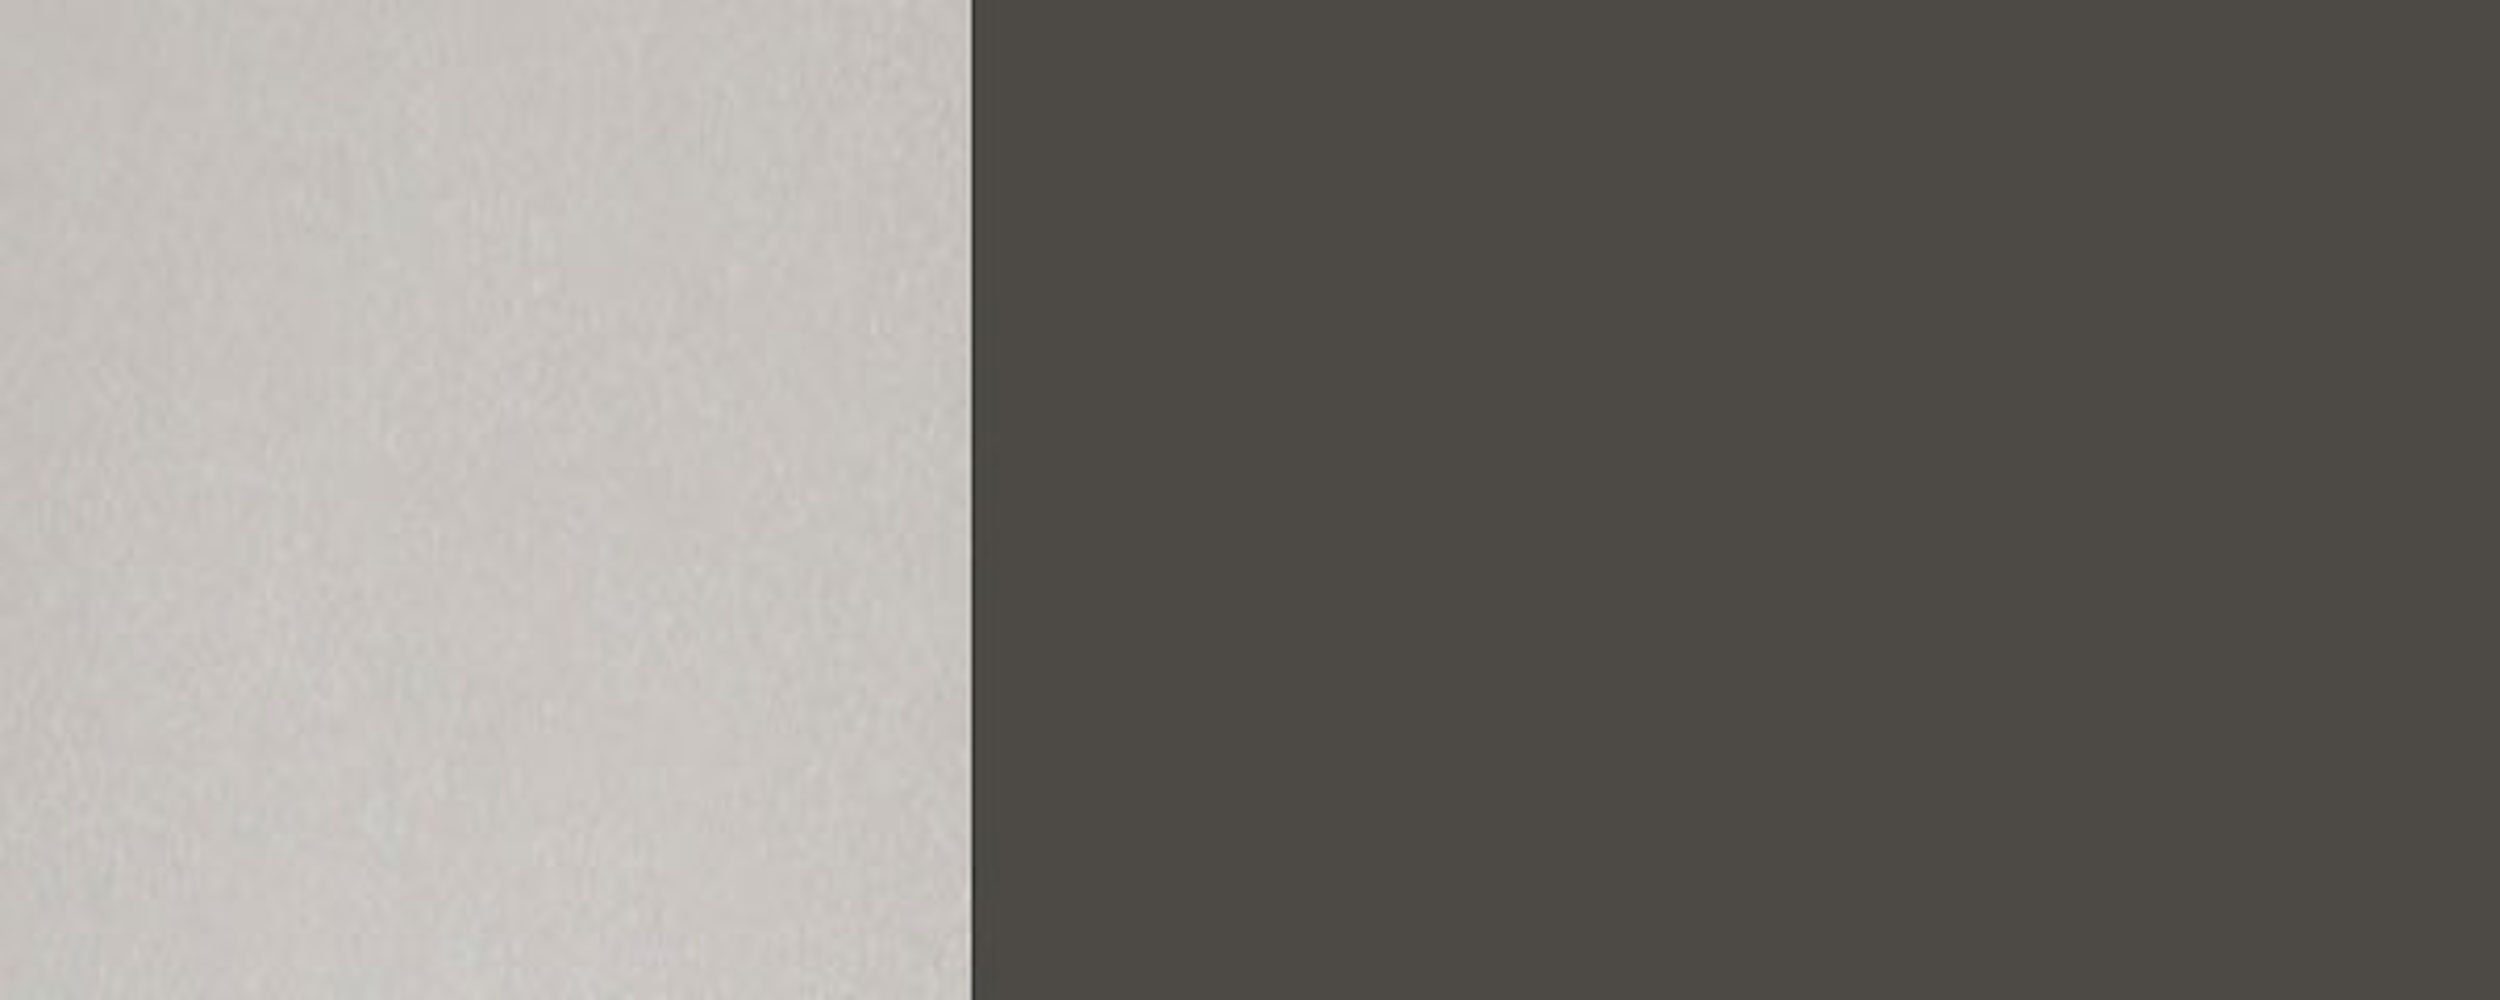 RAL 50cm Feldmann-Wohnen Korpusfarbe (Tivoli) 7022 Glasfront (glasklar) 1-türig wählbar matt Front- mit Tivoli umbragrau Klapphängeschrank und